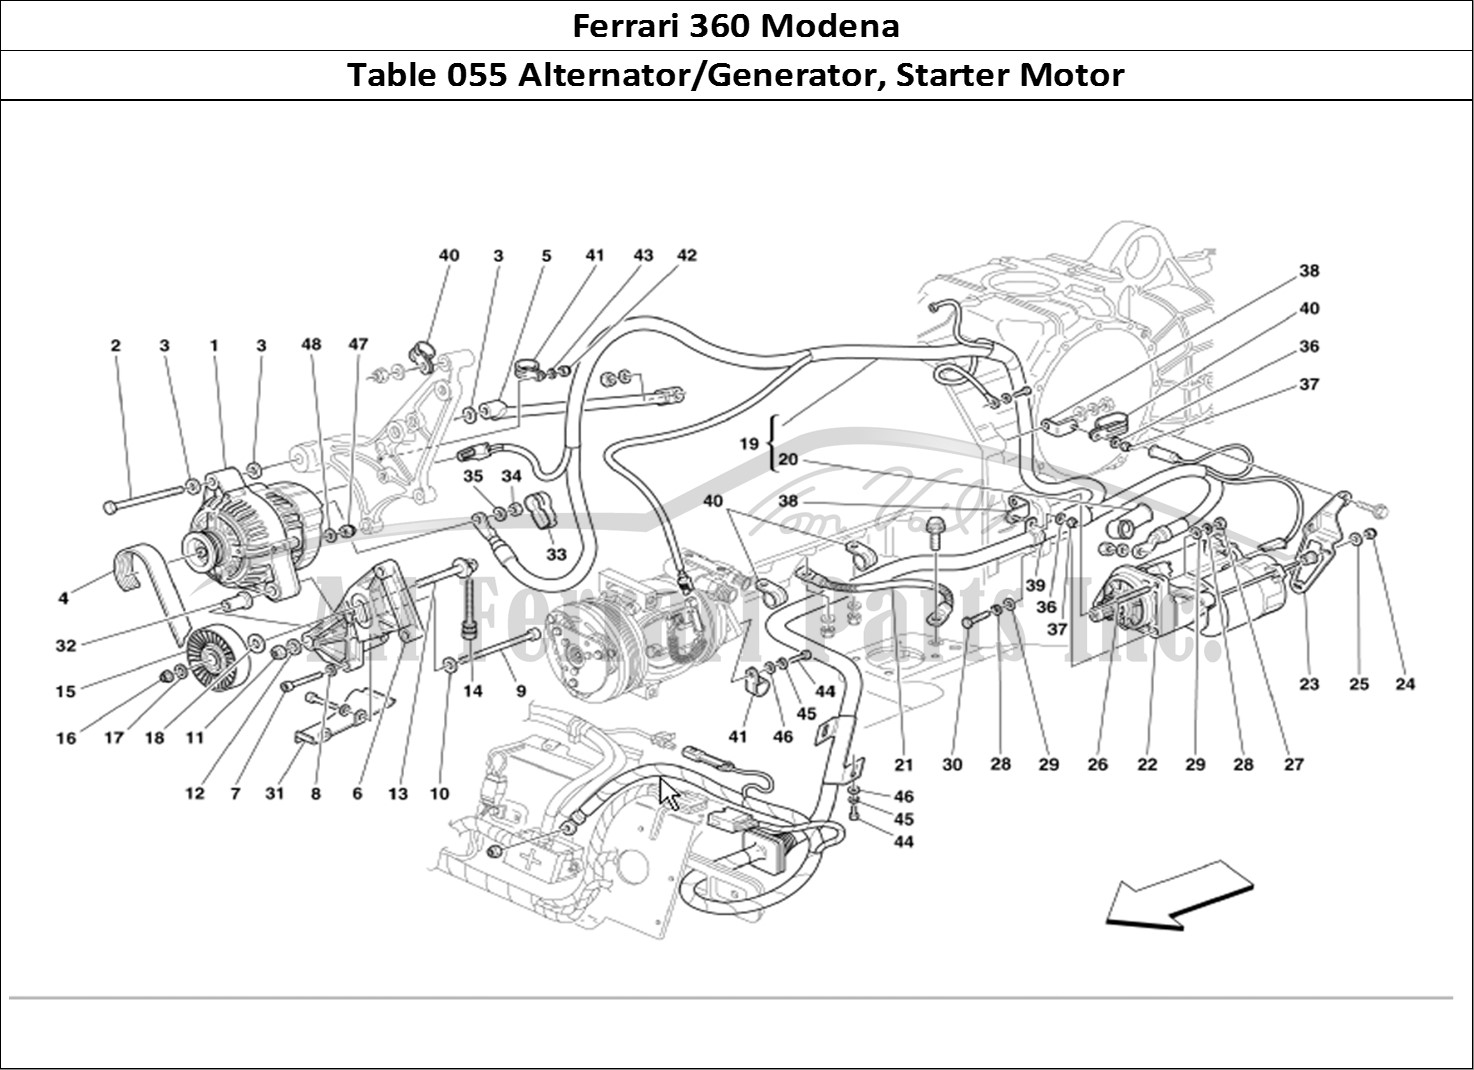 Ferrari Parts Ferrari 360 Modena Page 055 Current Generator Startin